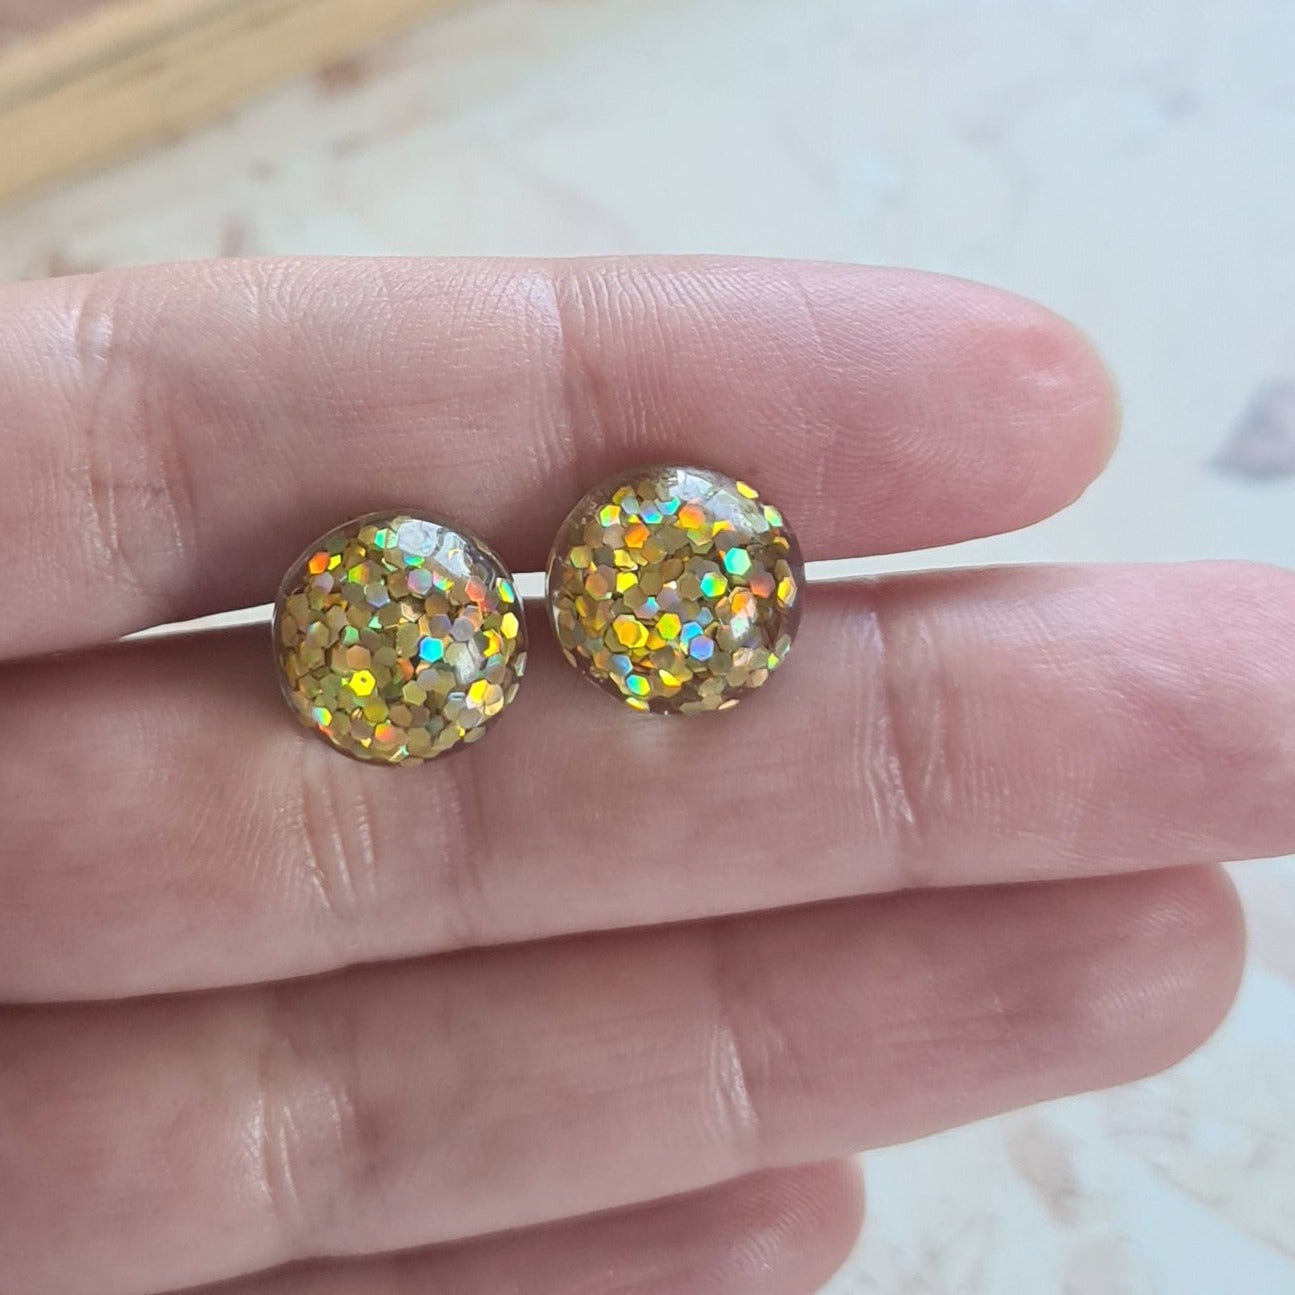 Sparkly gold, glitterball iridescent, tiny gold stud earrings - the joyful rebel 